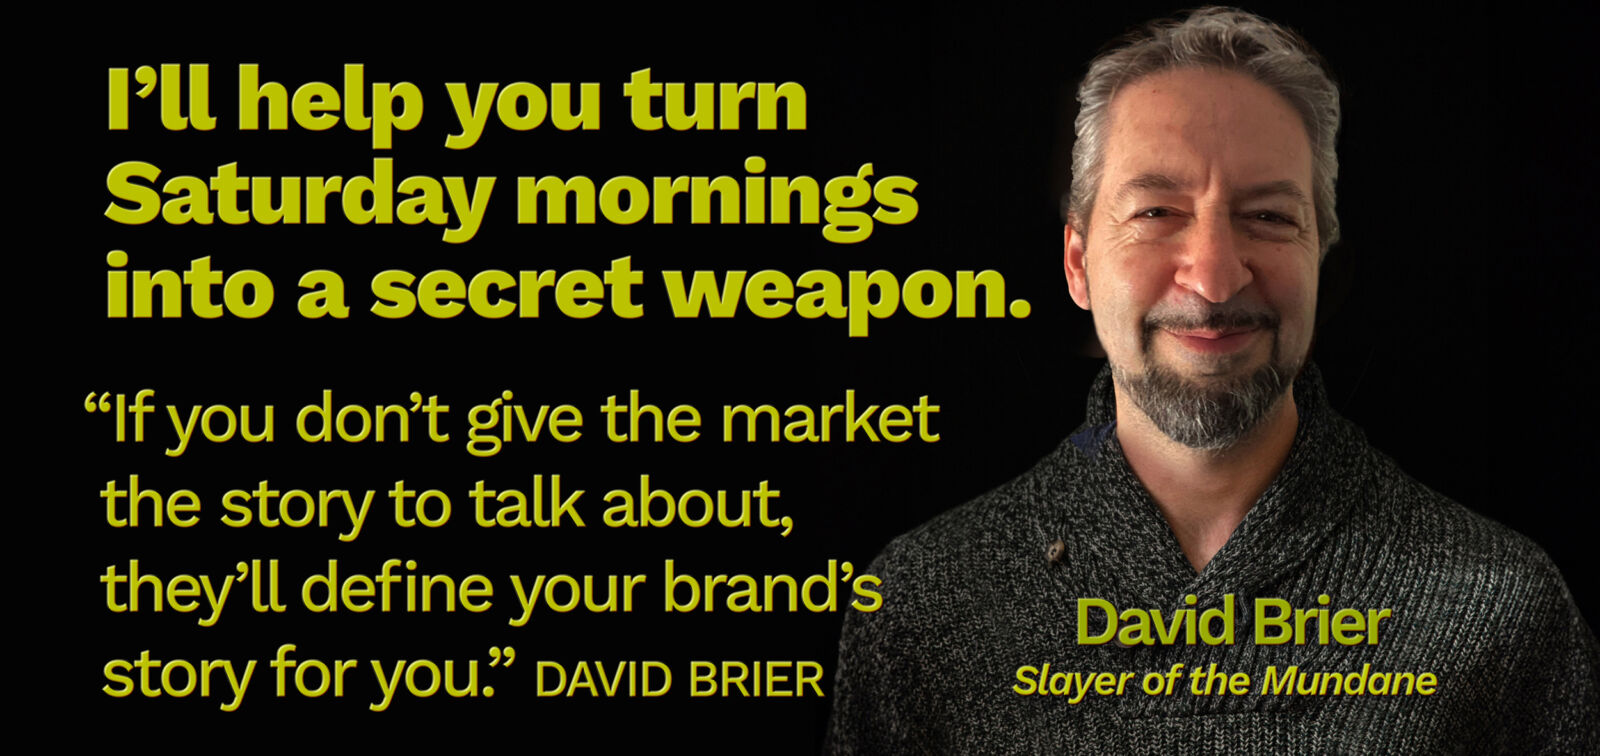 Free Branding Advice from David Brier Every Saturday